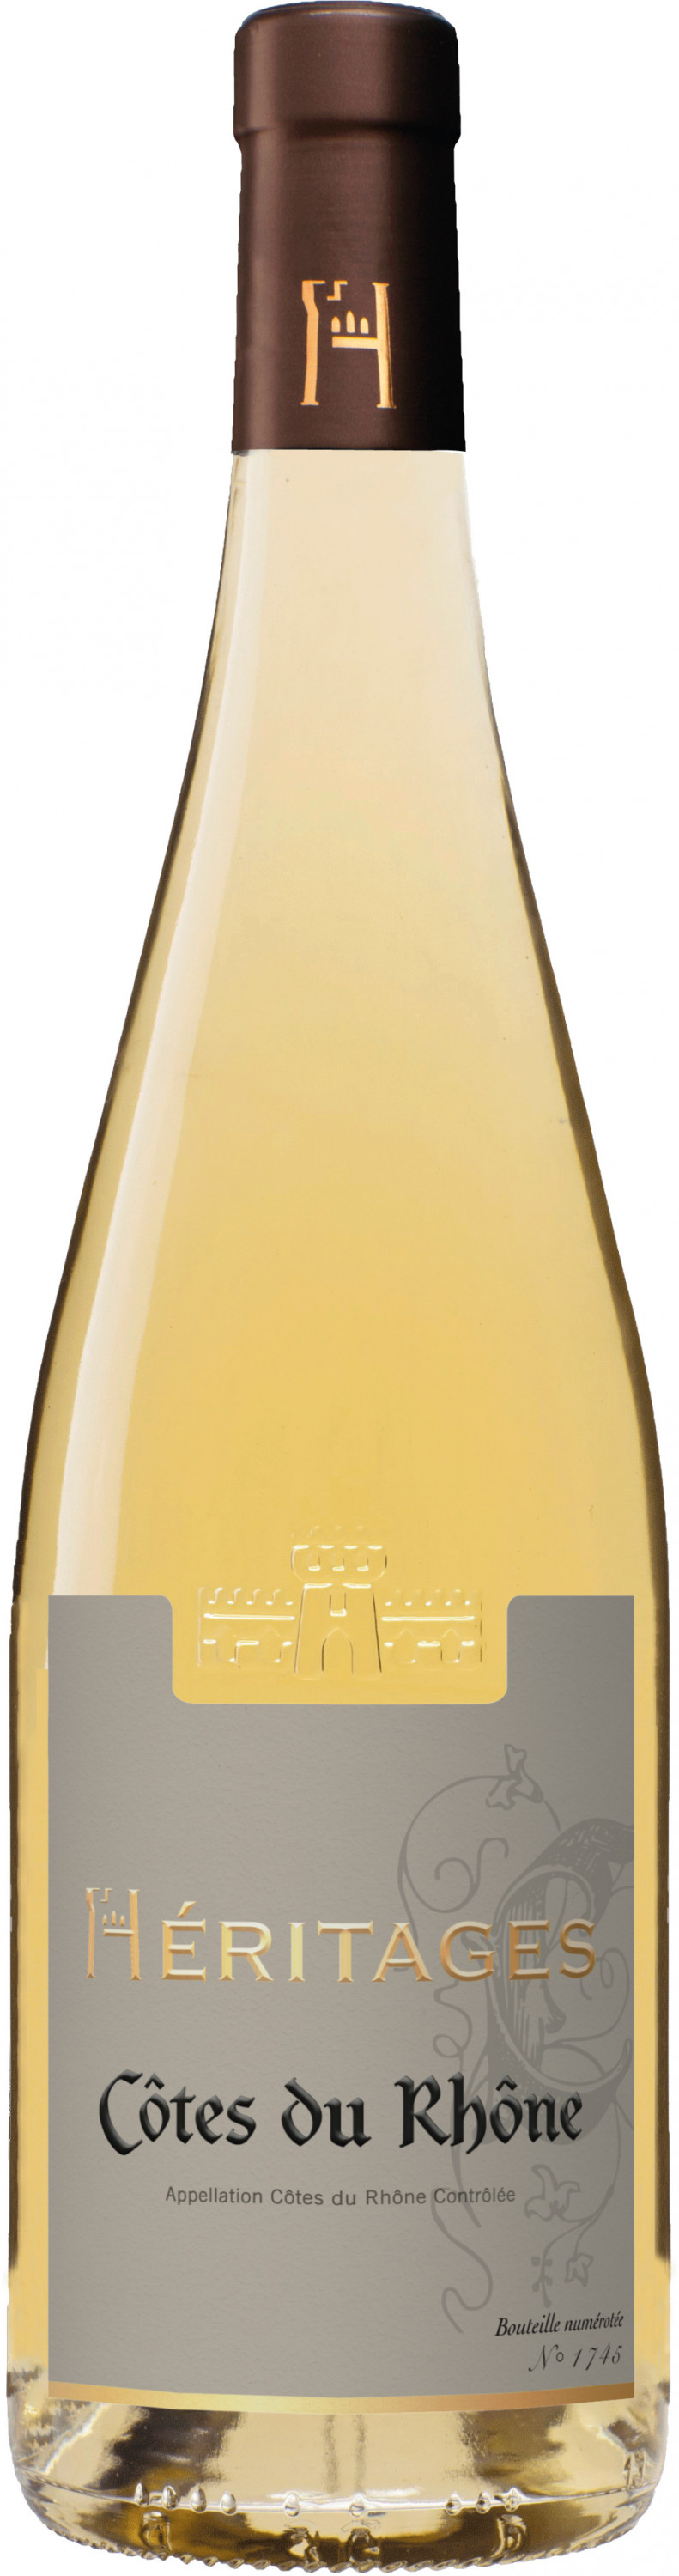 Bottle of Ogier Heritages Côtes du Rhône Blanc from search results